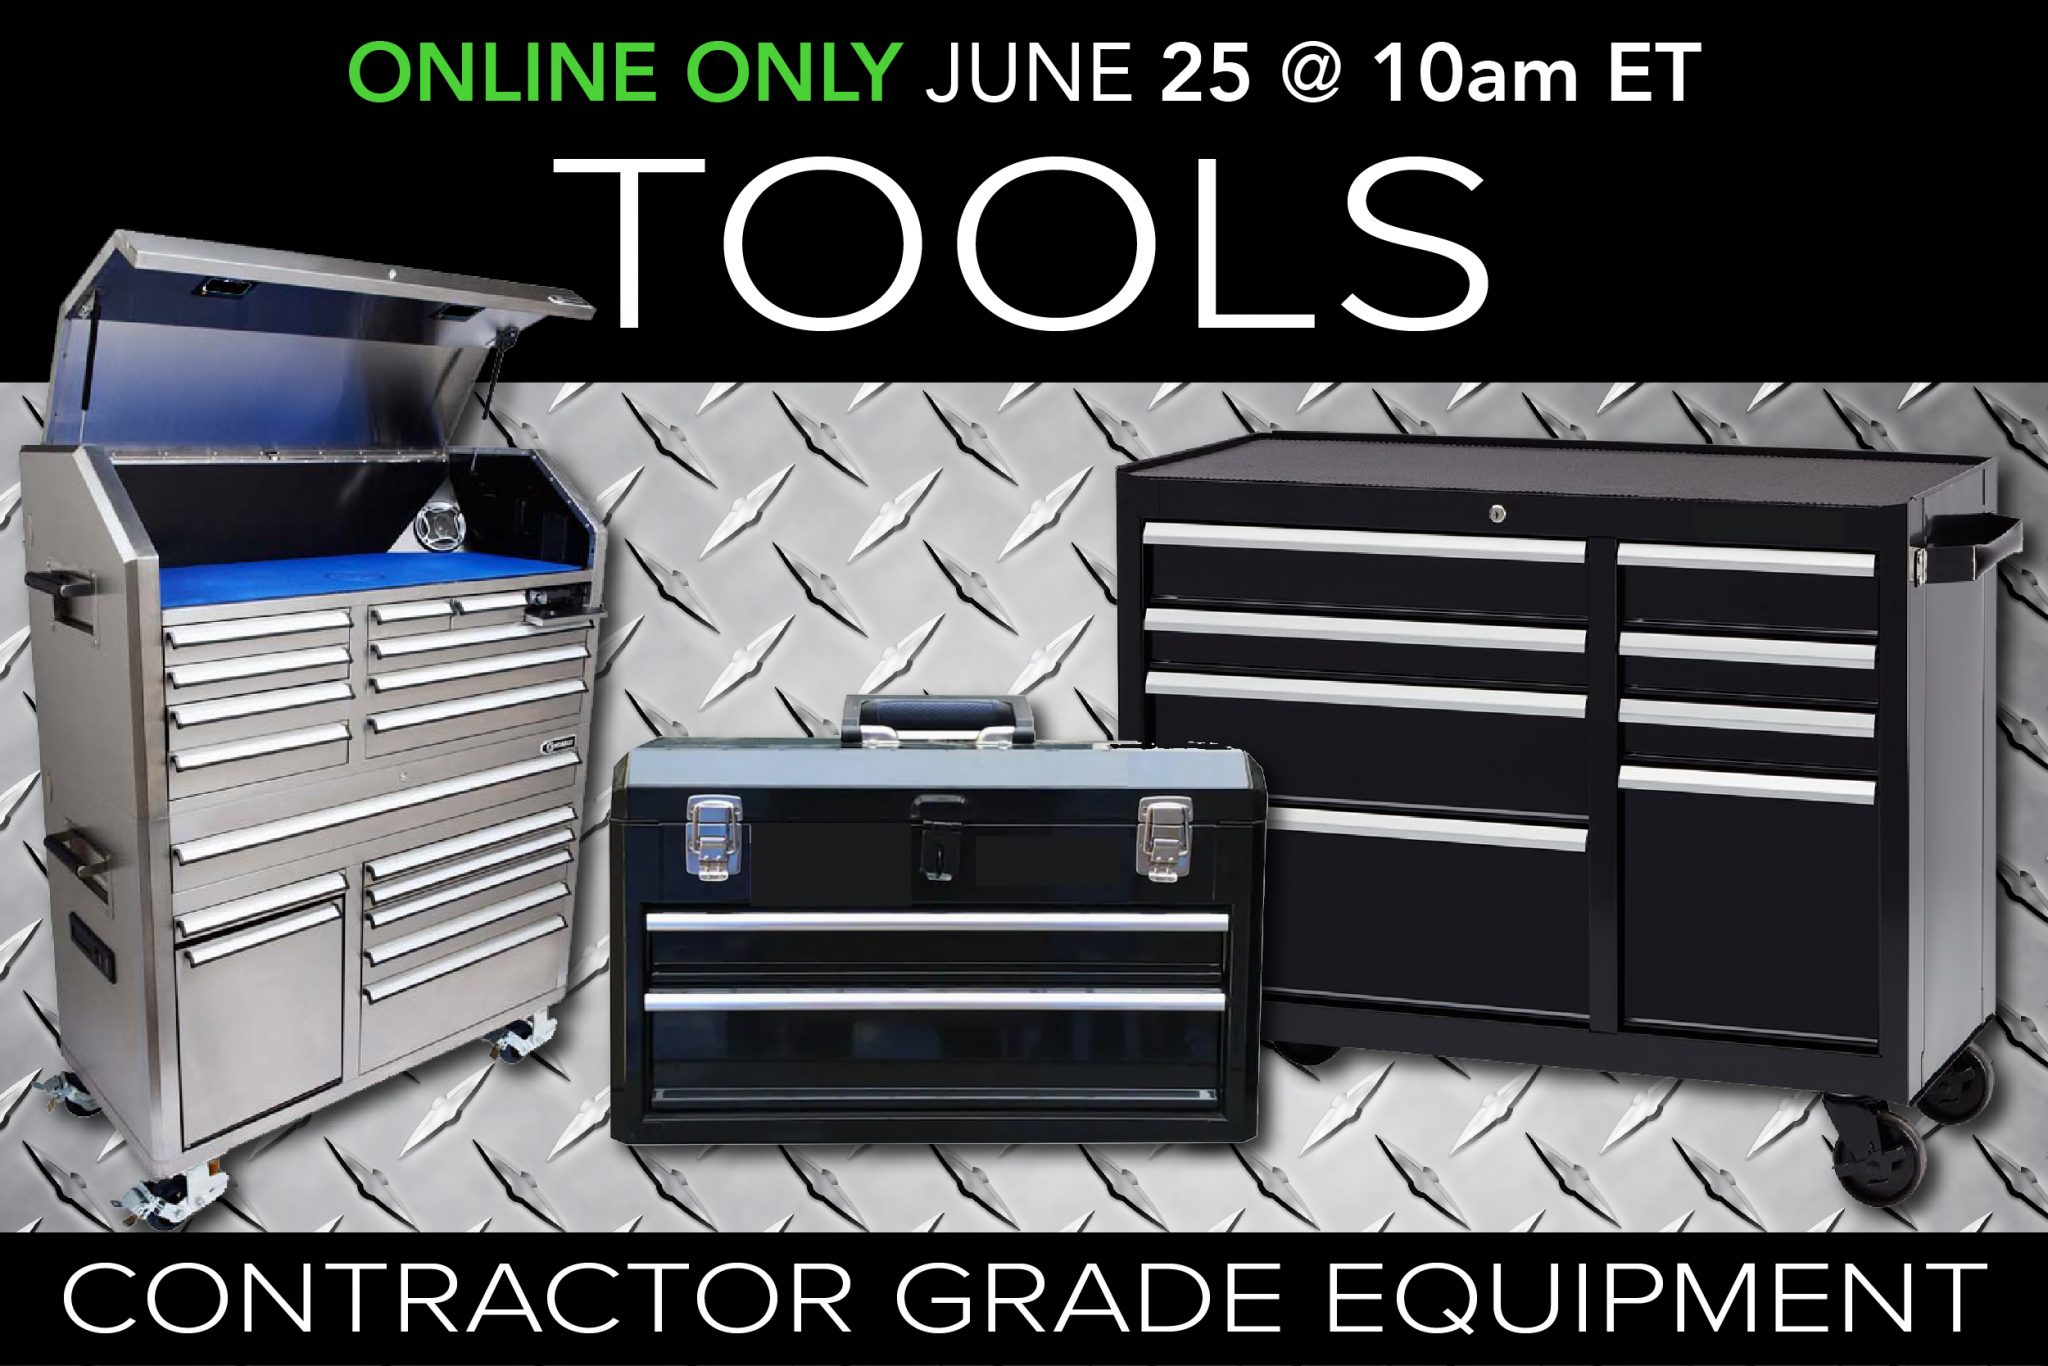 June 2020 contractor grade equipment tools public auction